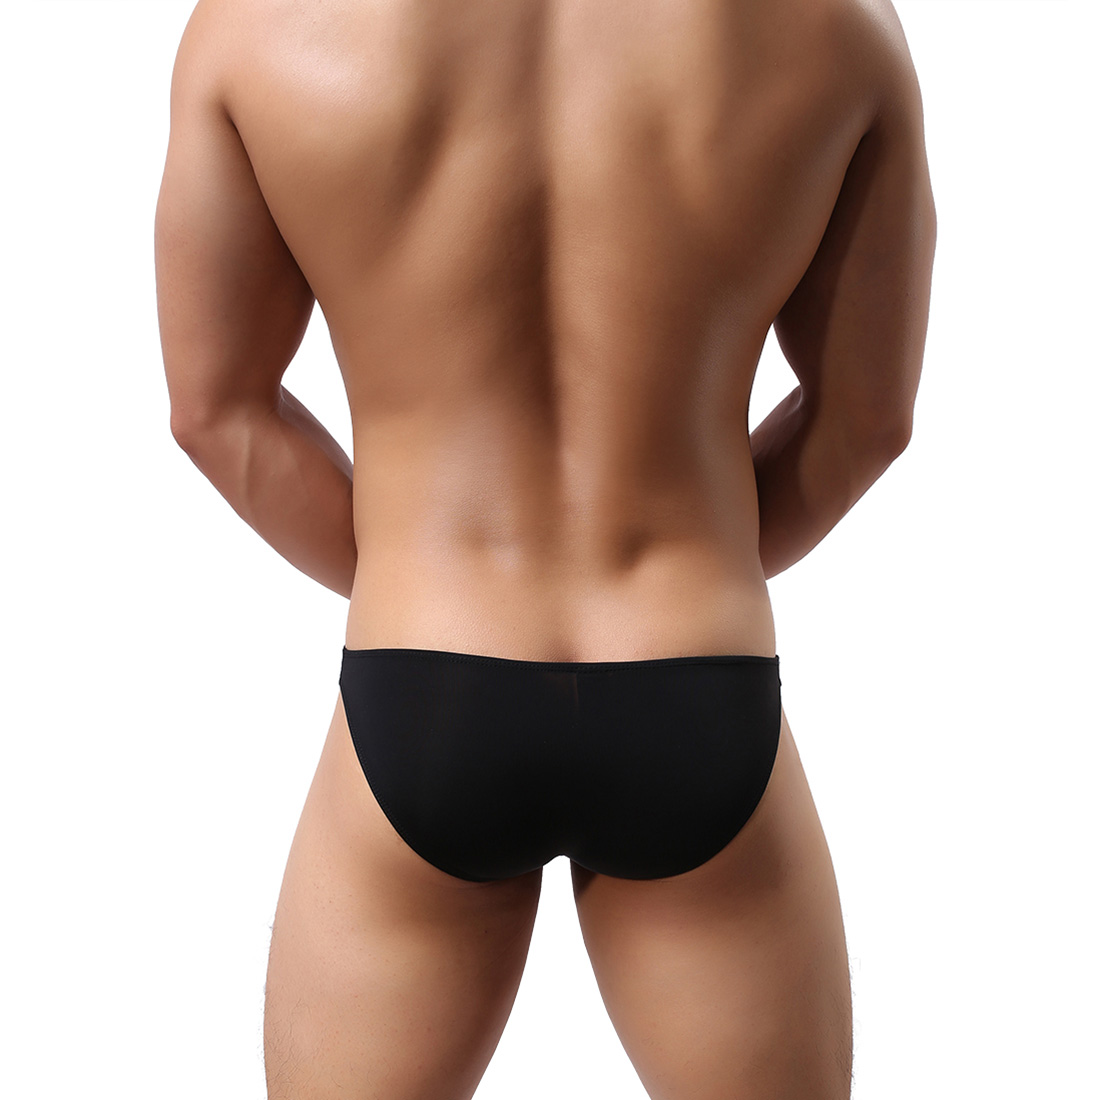 Men's Lingerie Underwear Sexy Bikini Triangle Pants Shorts with Penis Sheath WH44 Black L